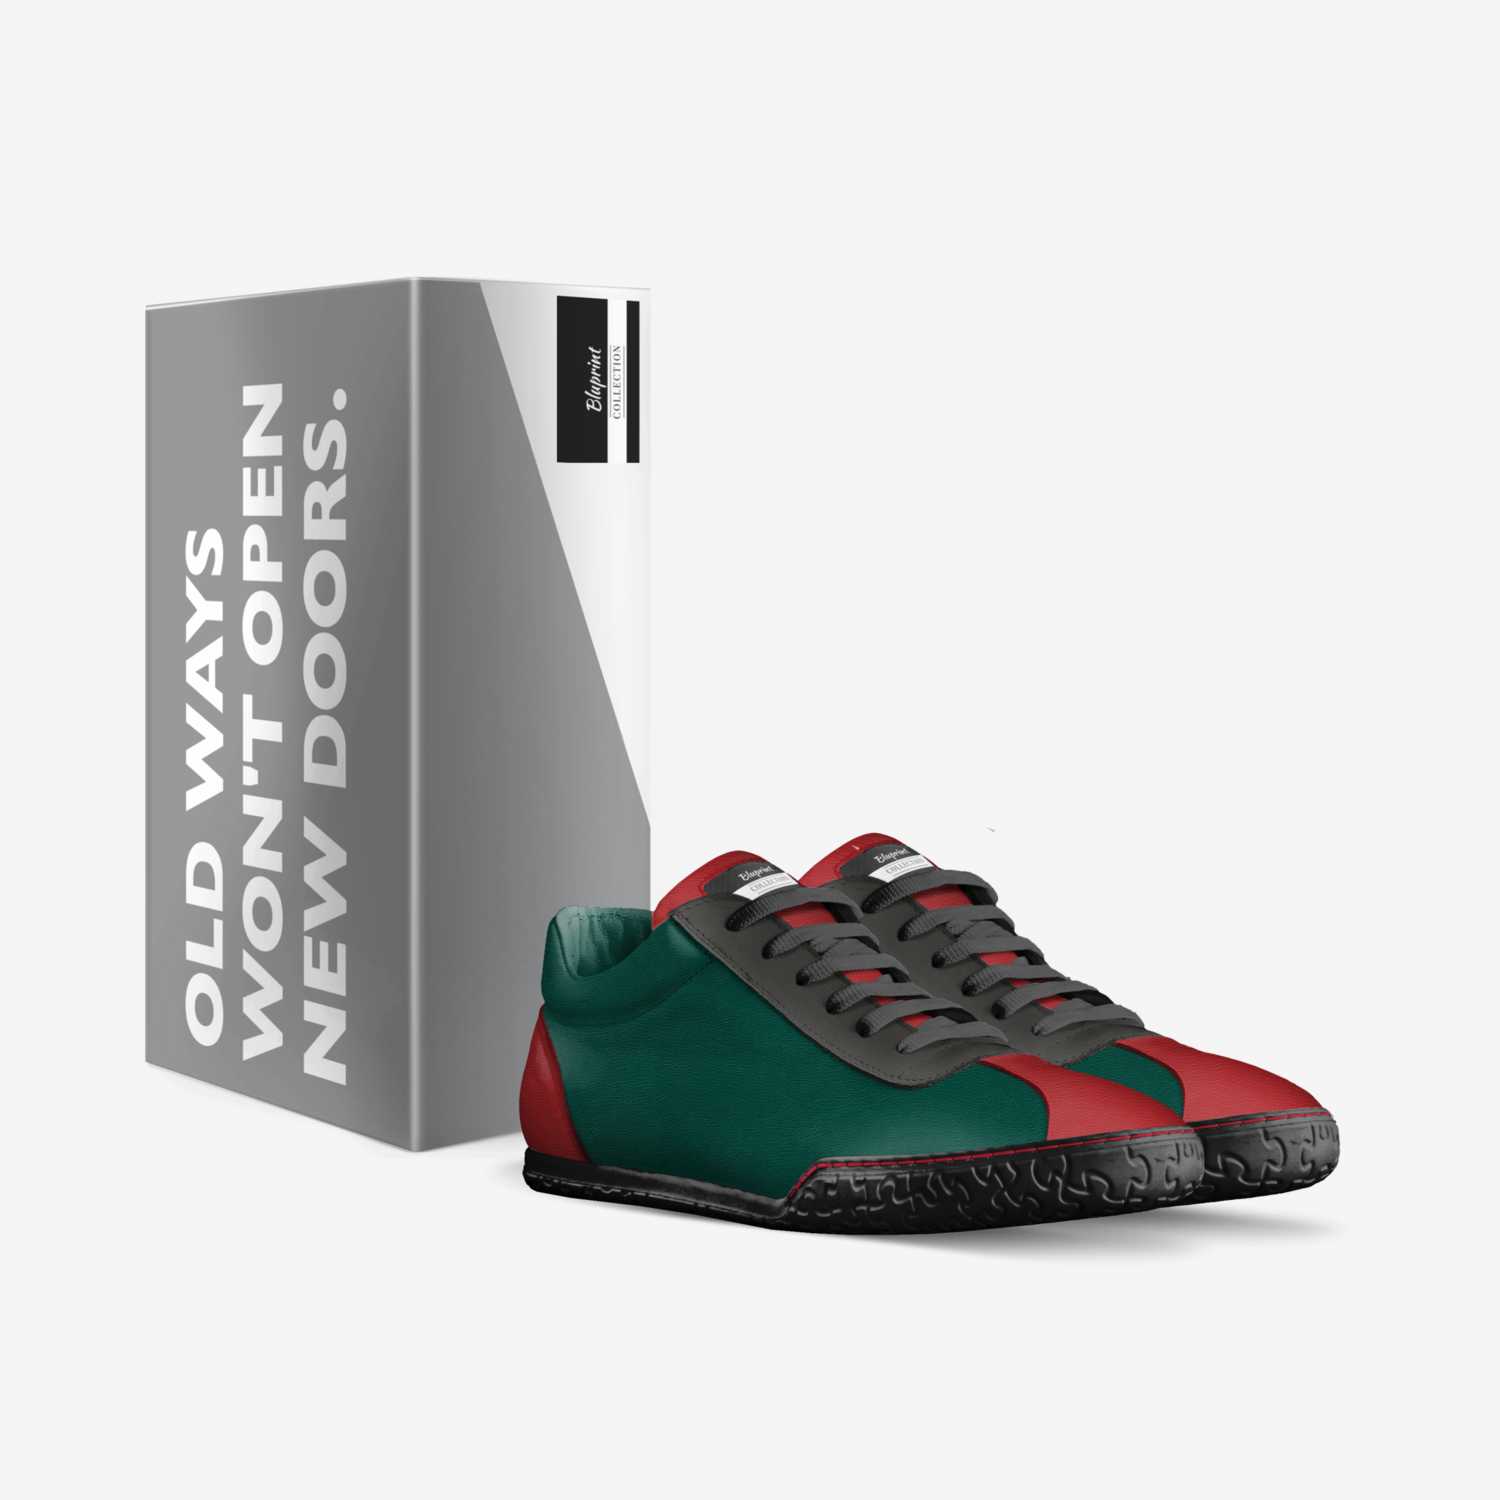 Bluprint custom made in Italy shoes by Keiara Heard | Box view